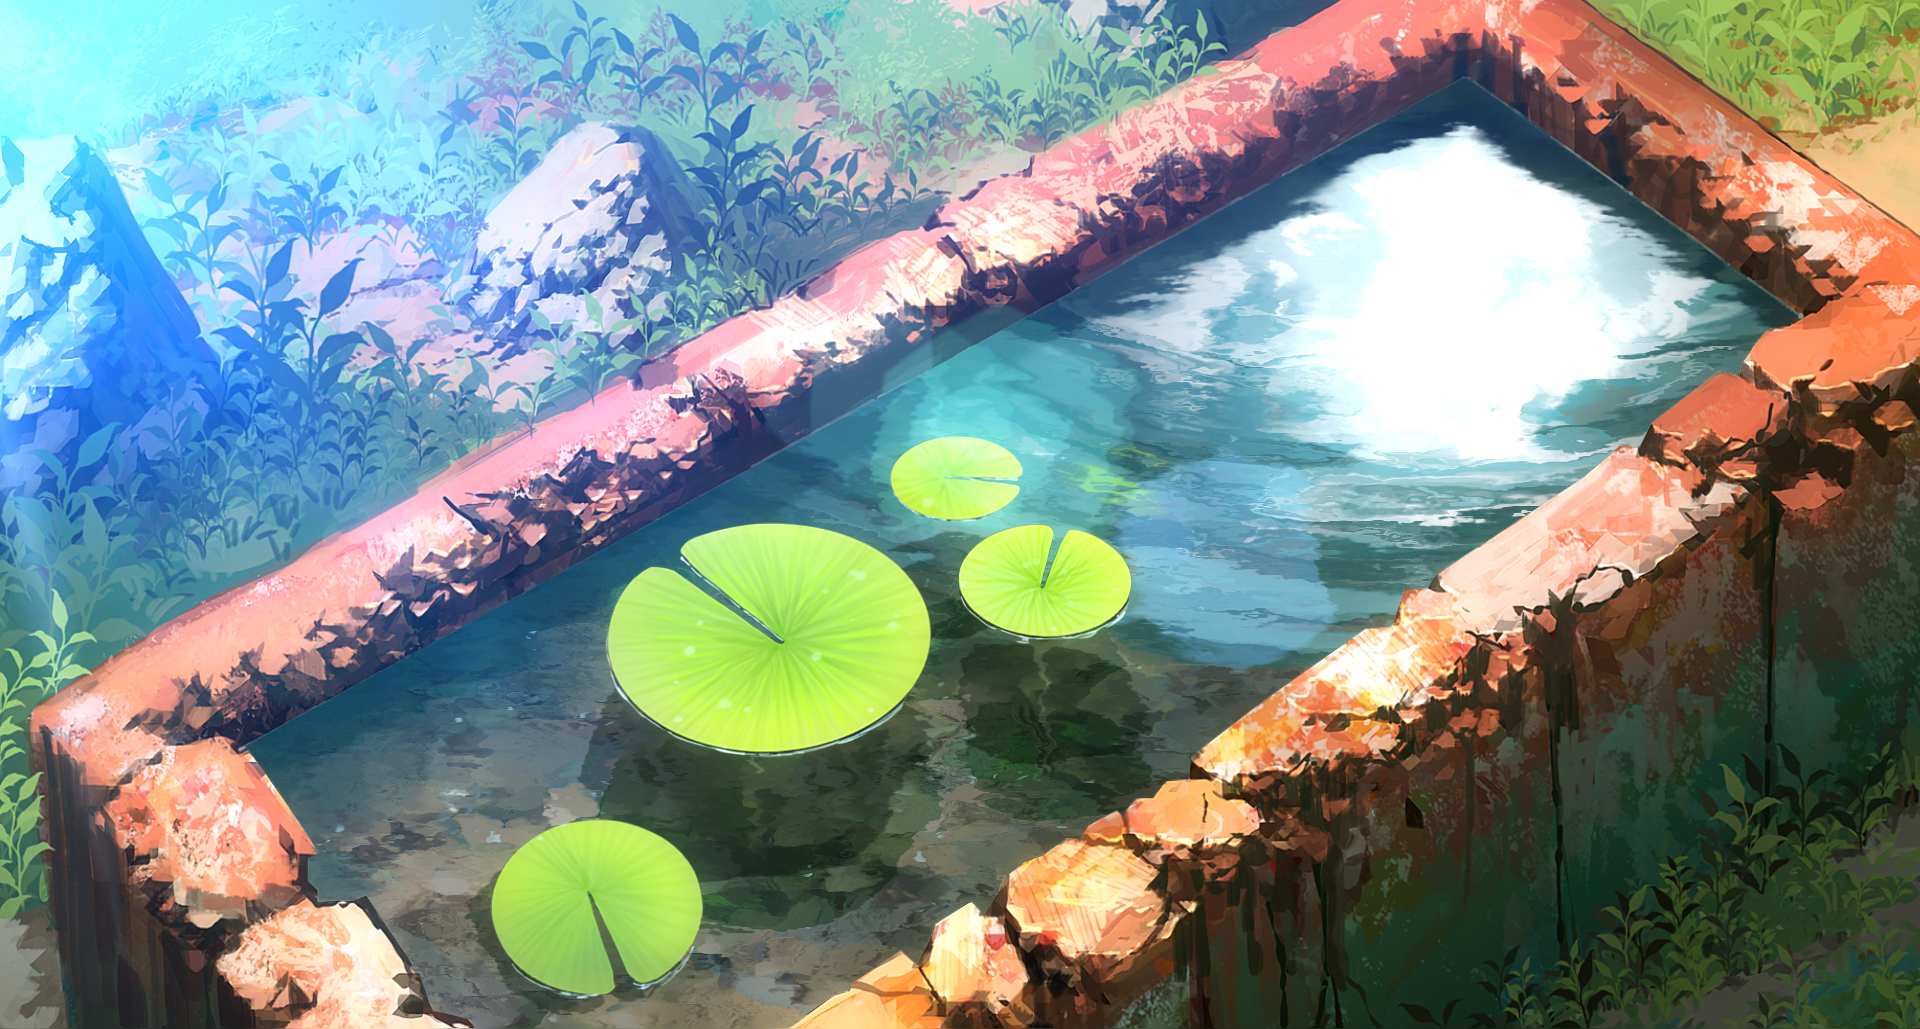 Solitary lotus pond live wallpaper [DOWNLOAD FREE]